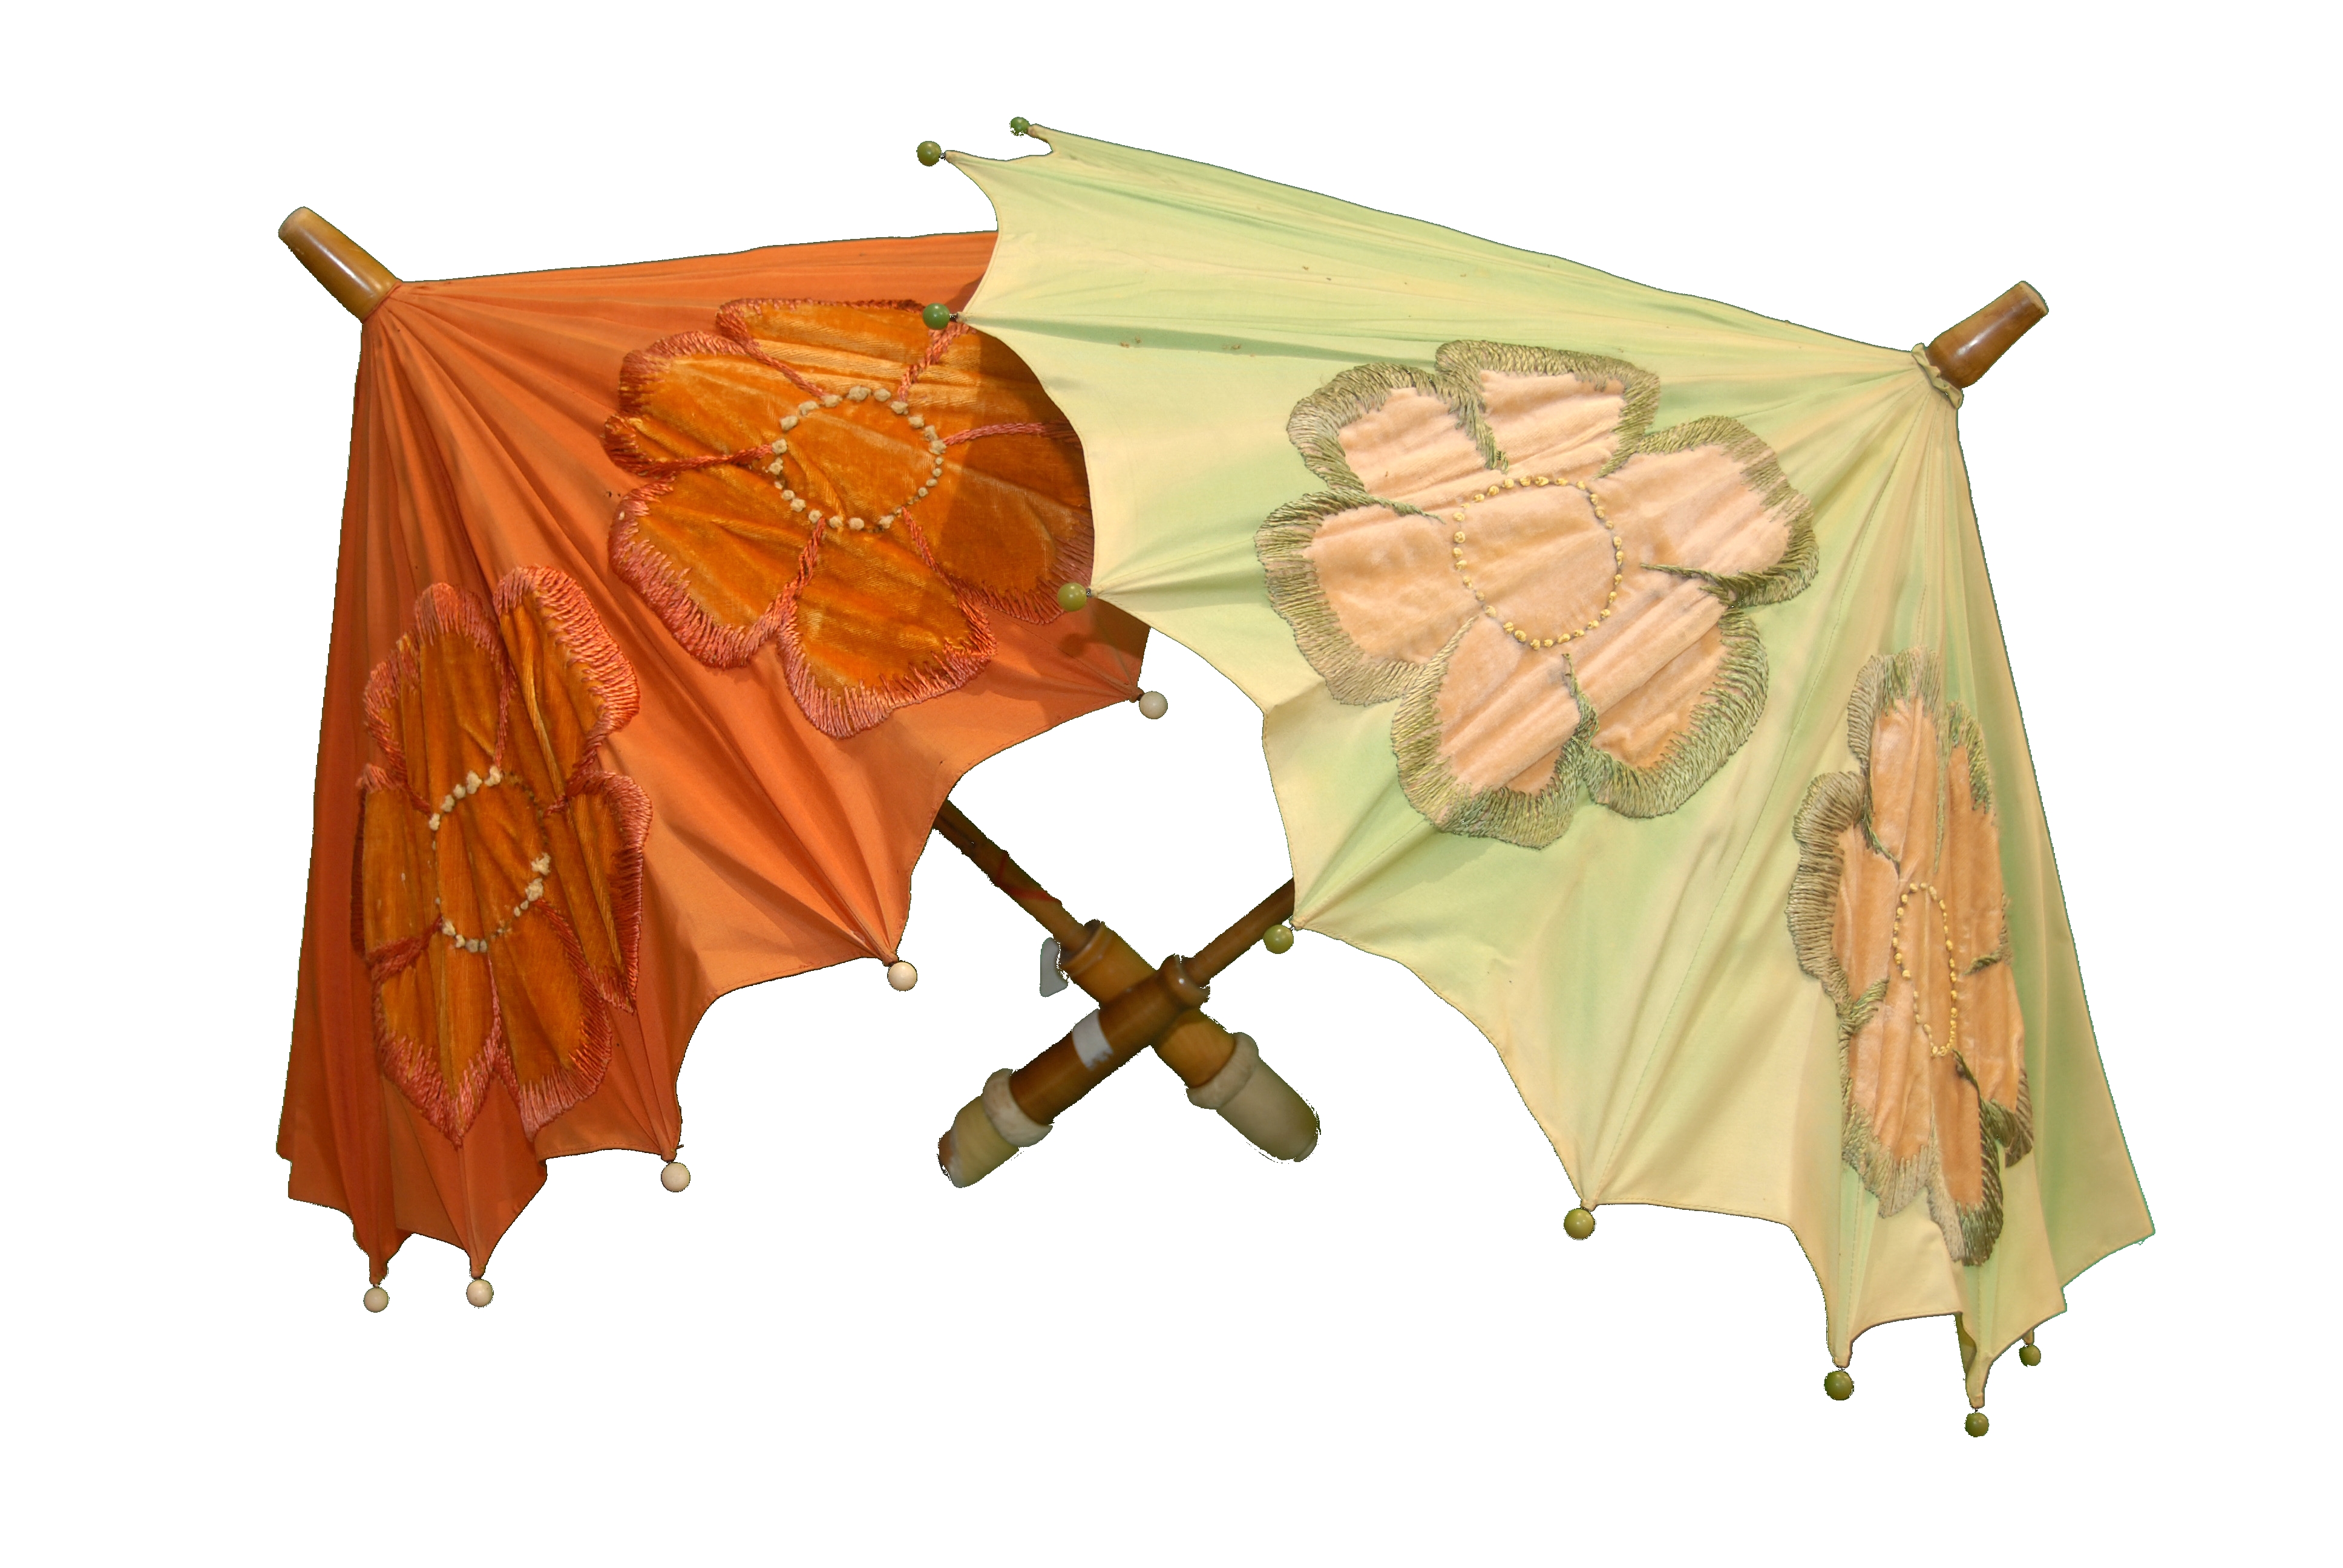 The umbrella.